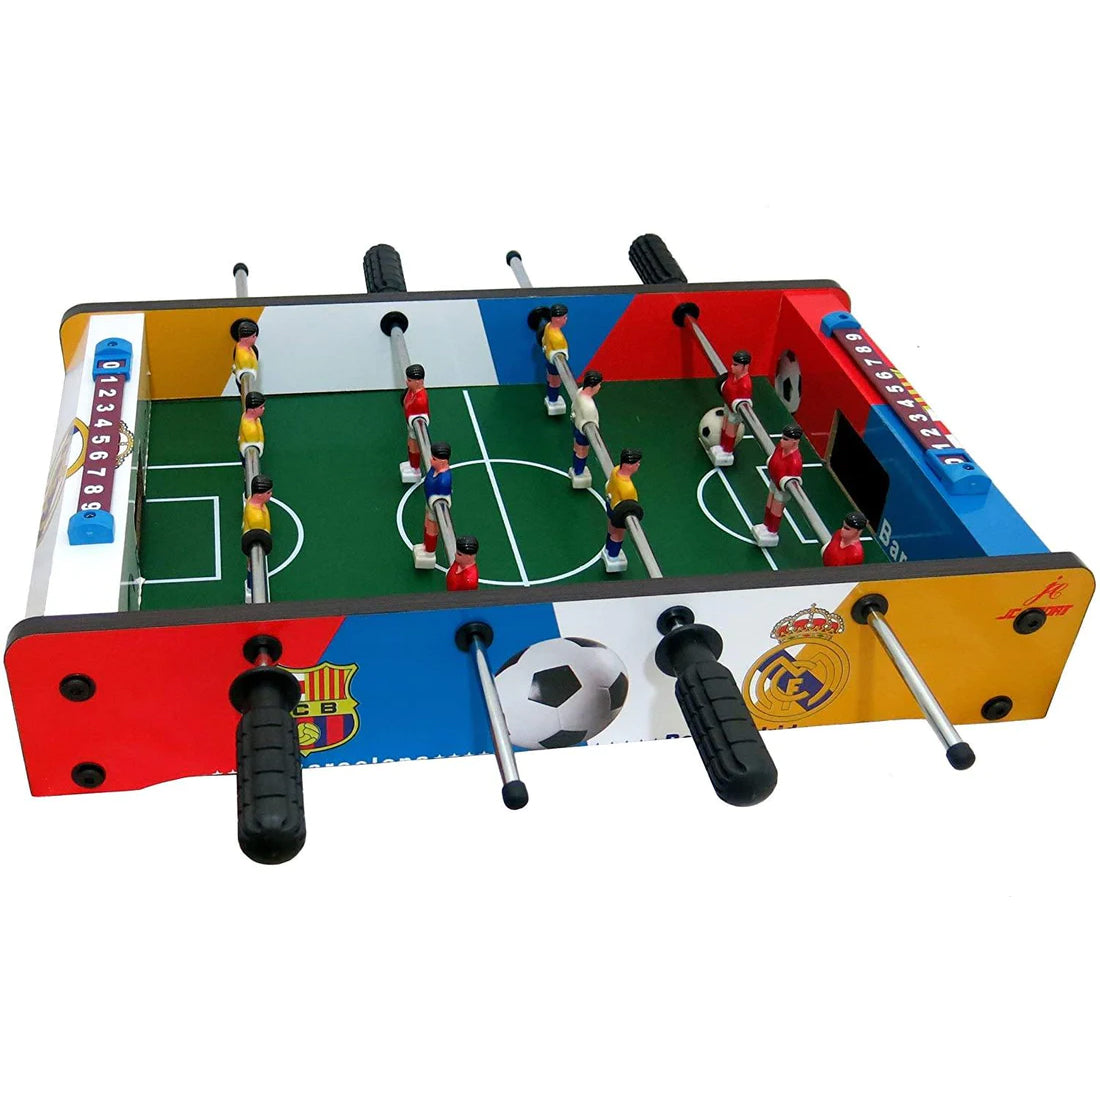 Prokick Mid-Sized Foosball, Mini Football, Table Soccer Game 51 Cms